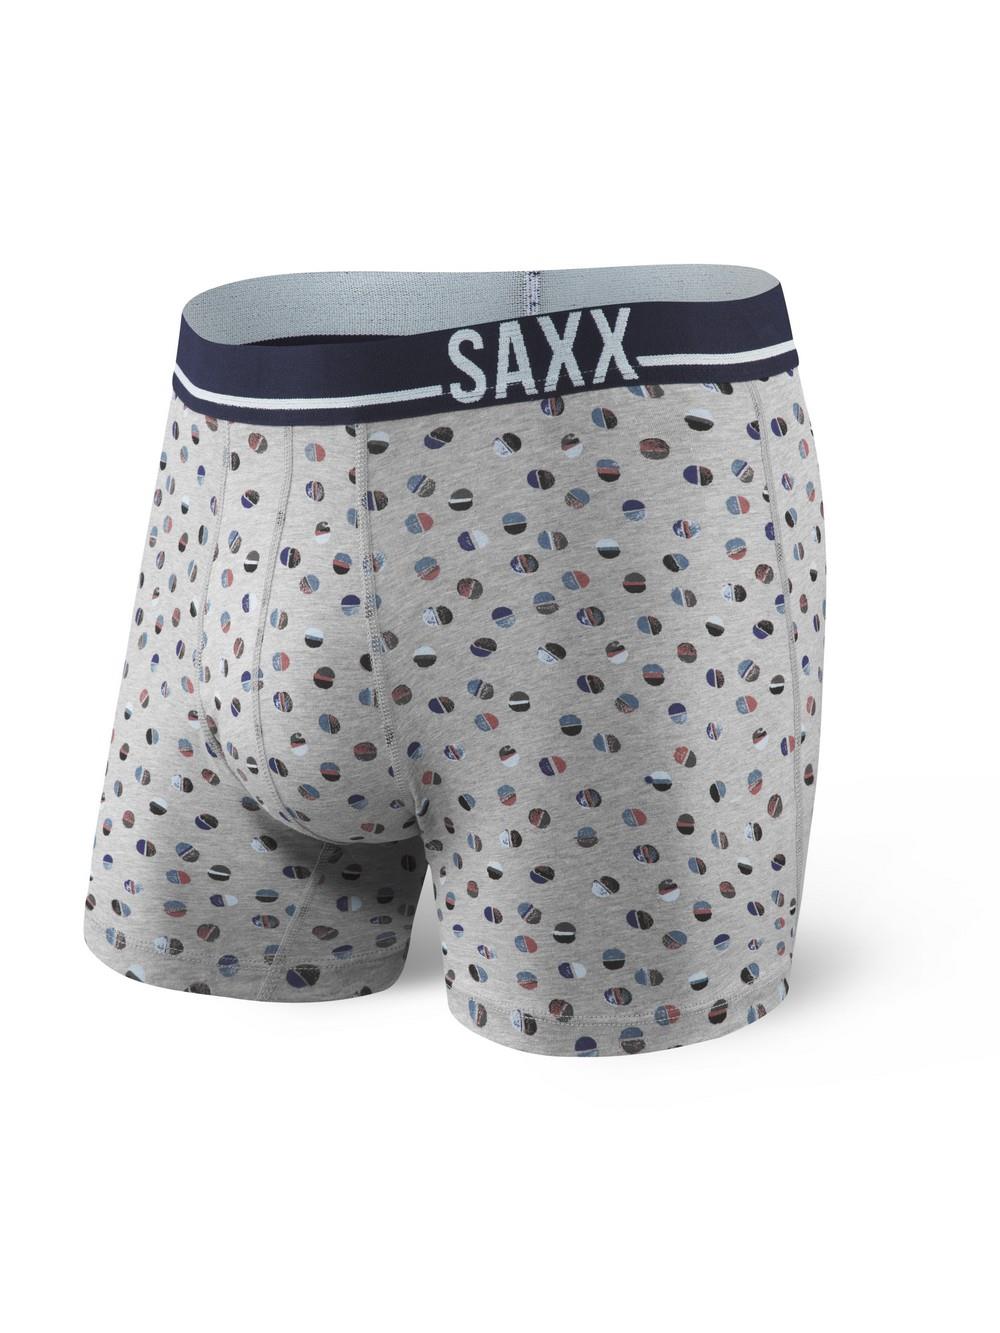 SAXX 3 Six Five Boxer BB18 – My Top Drawer